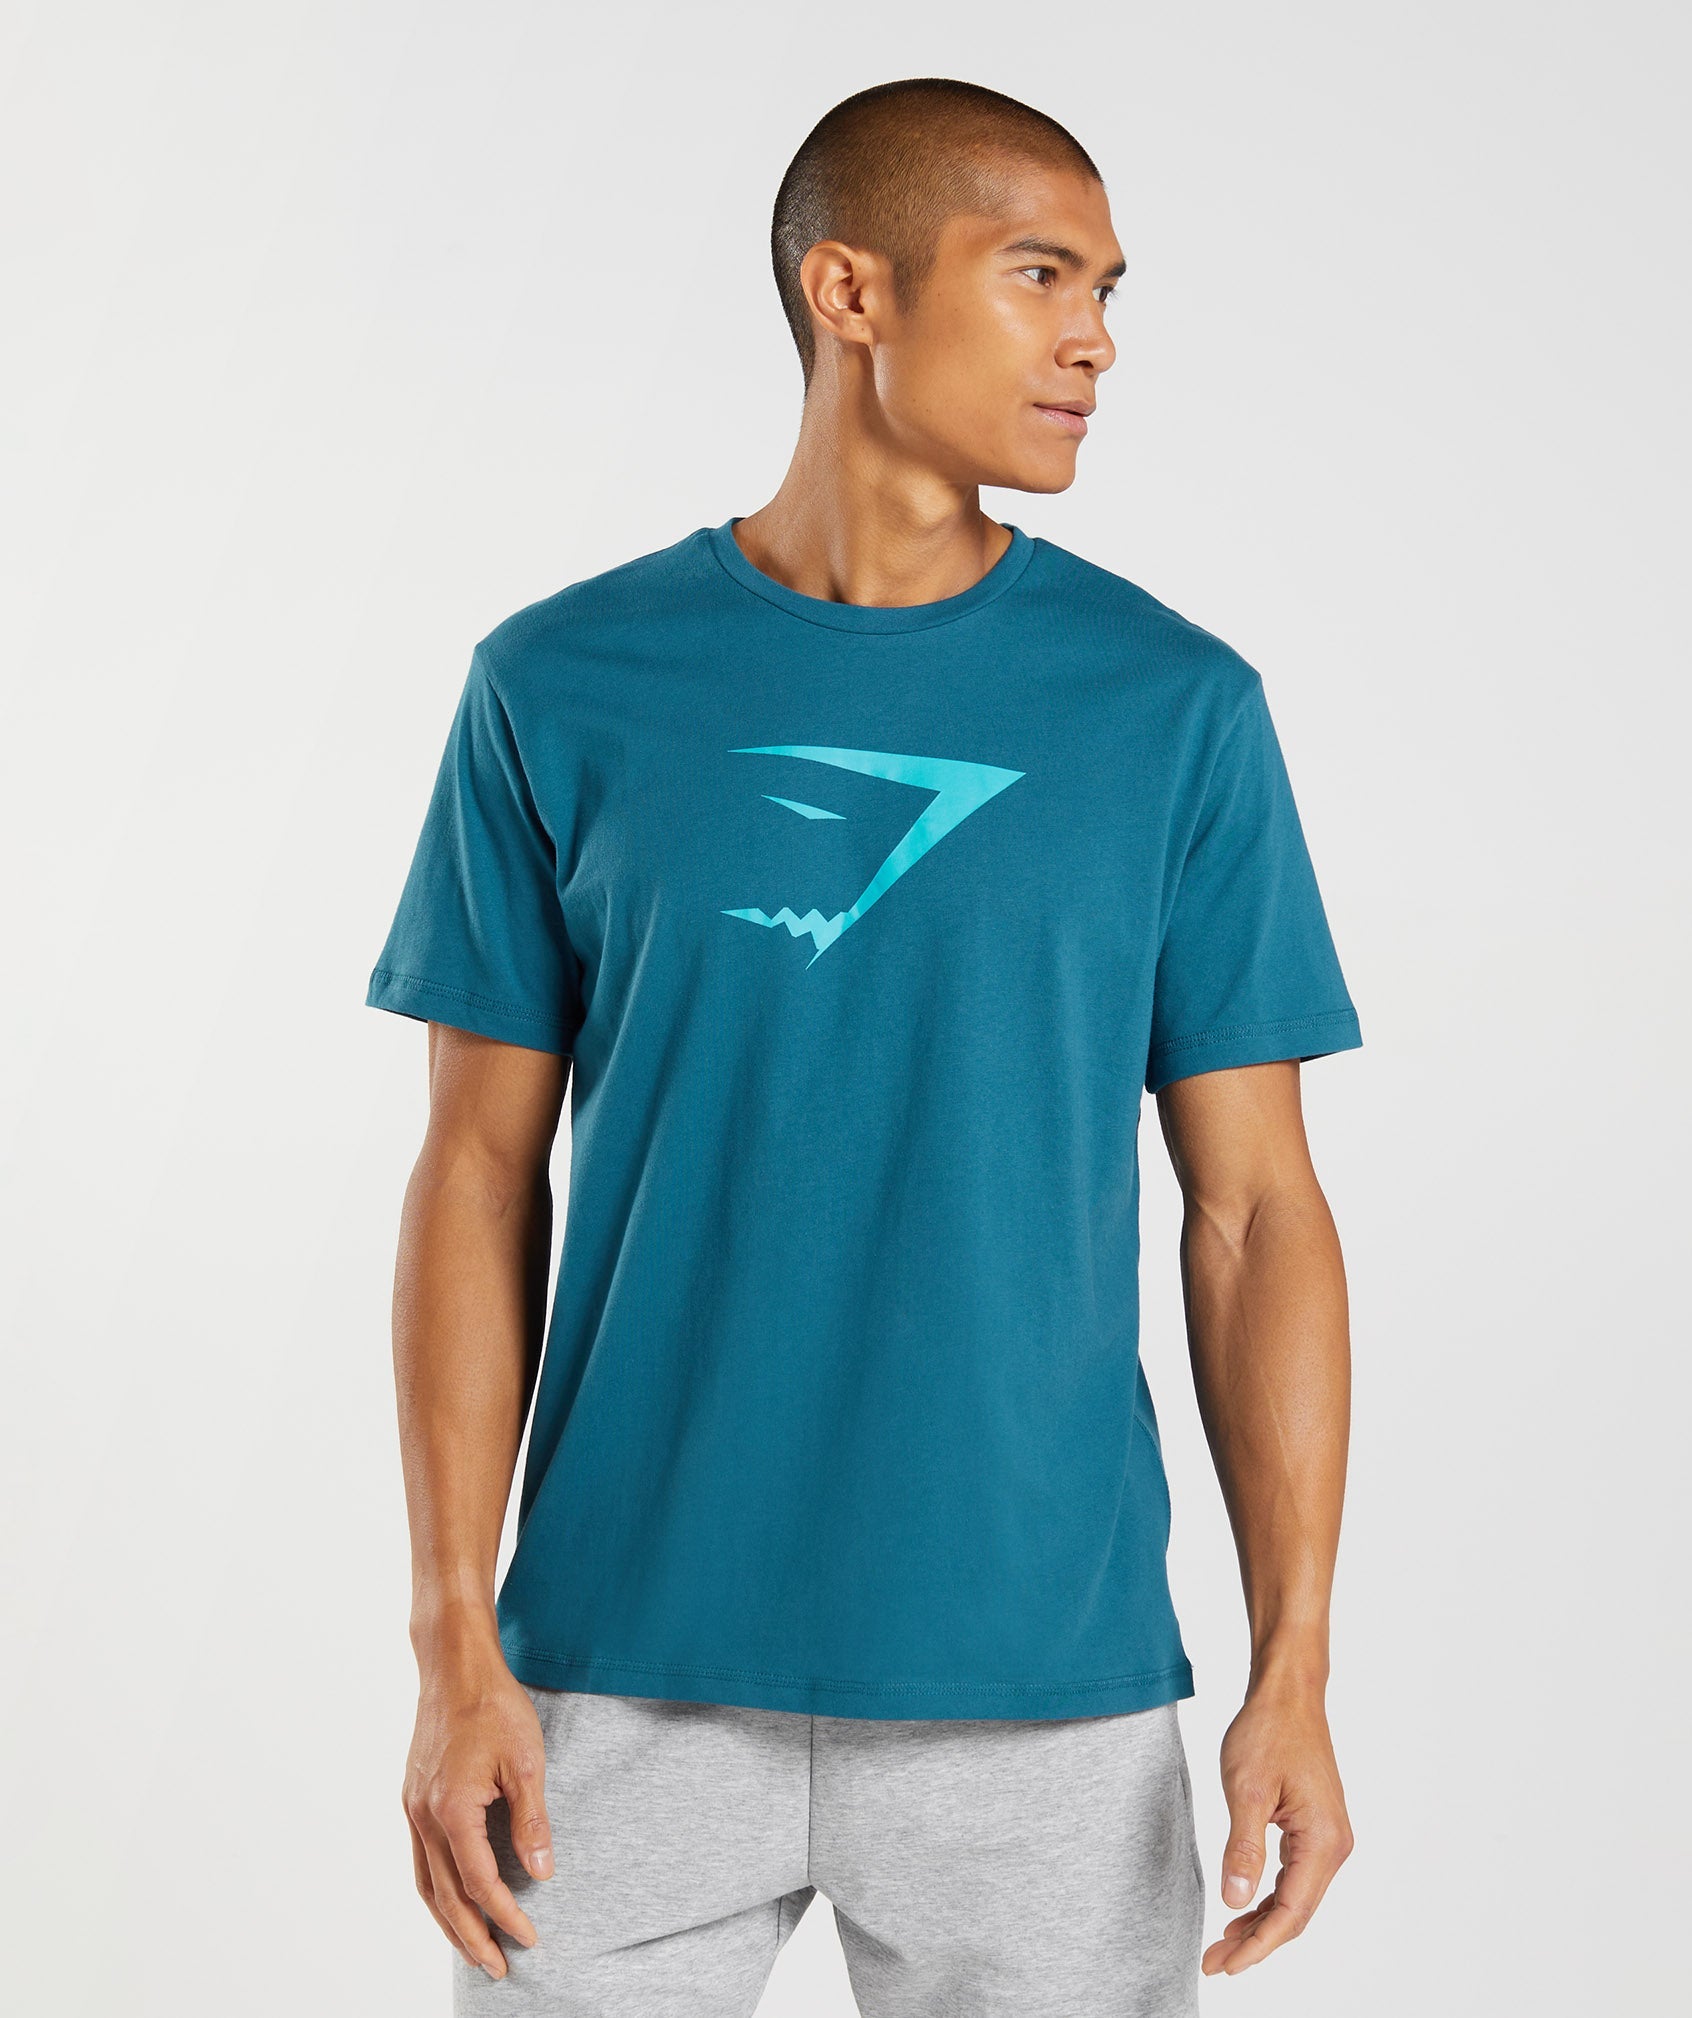 Sharkhead Infill T-Shirt in Atlantic Blue - view 1